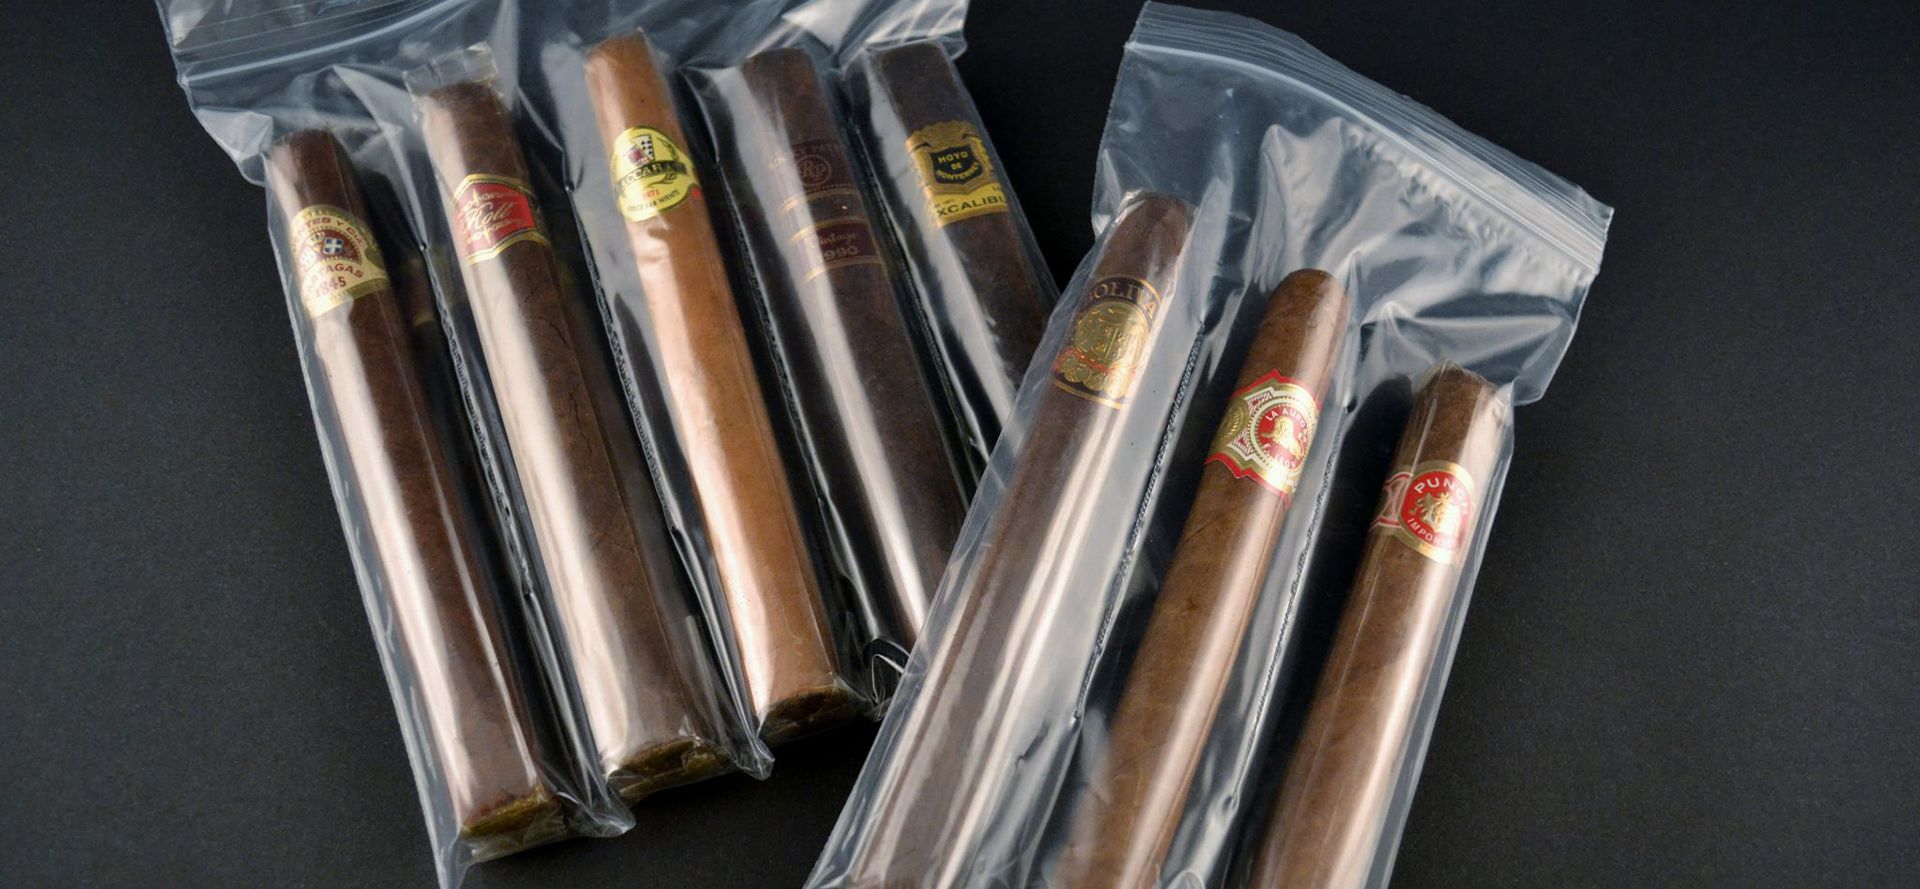 Ziploc Bag With Cigars.